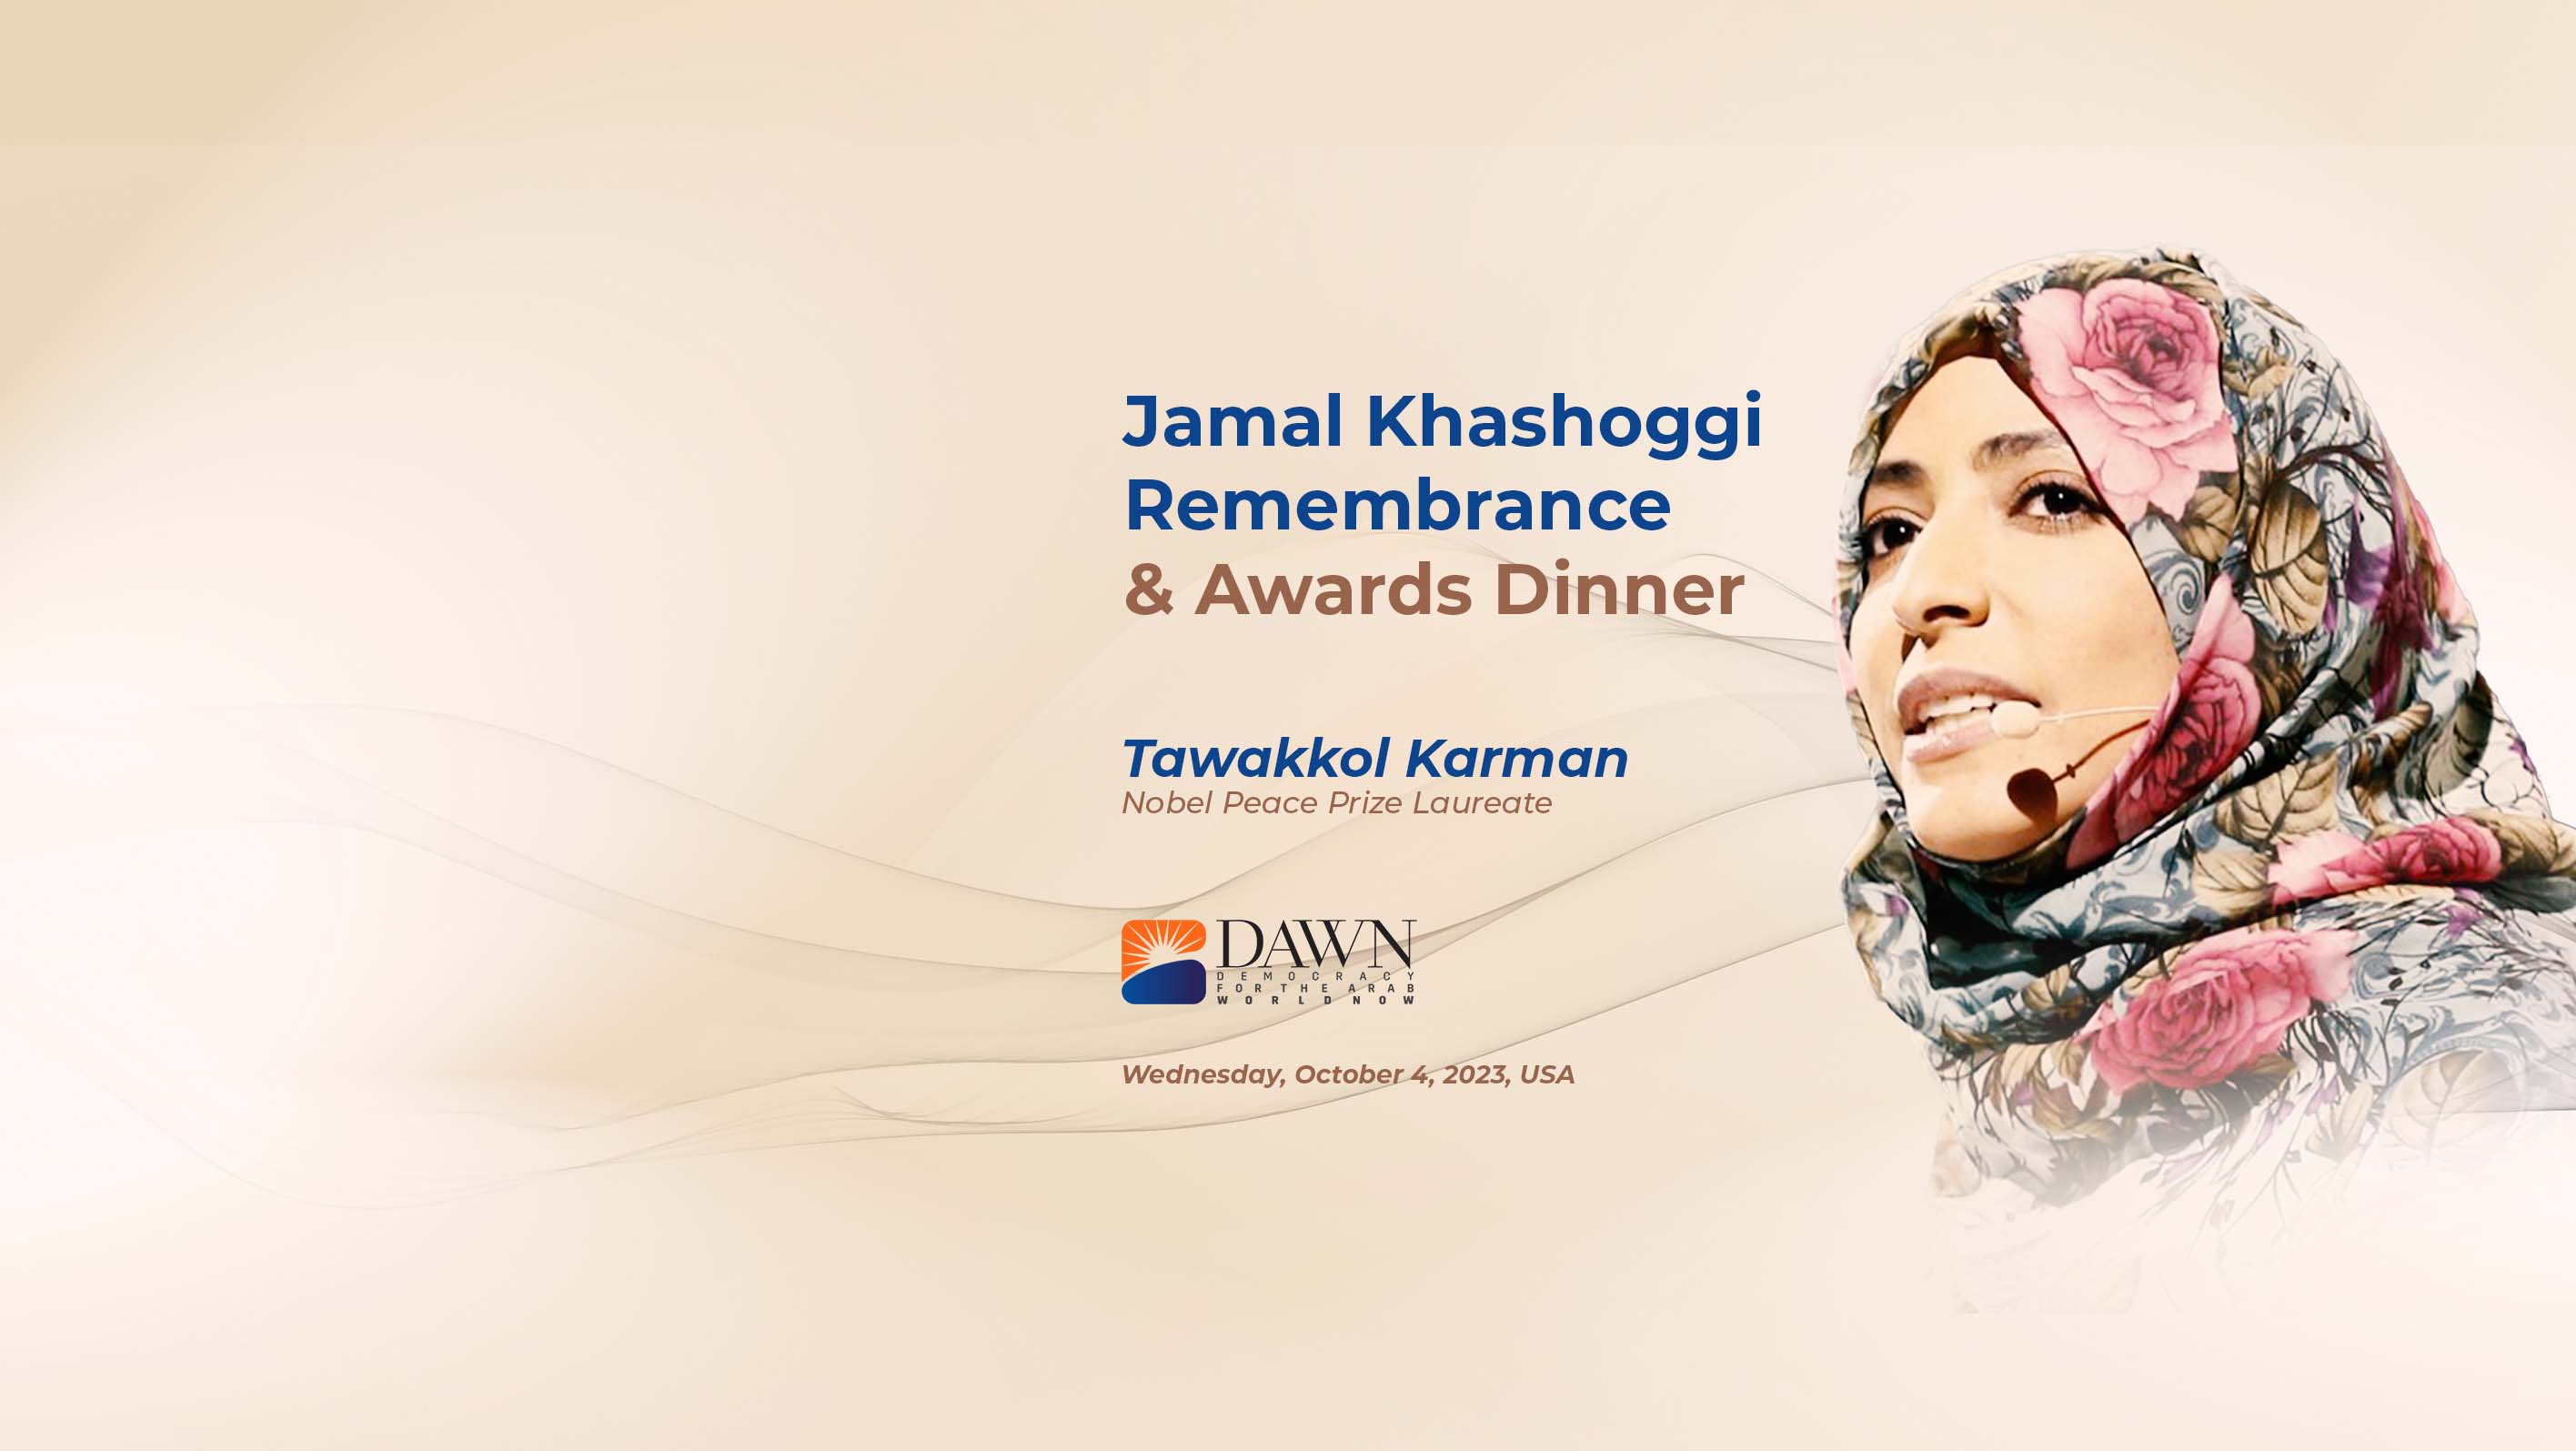 Tawakkol Karman to commemorate fifth anniversary of Jamal Khashoggi's assassination at DAWN event in Washington, DC